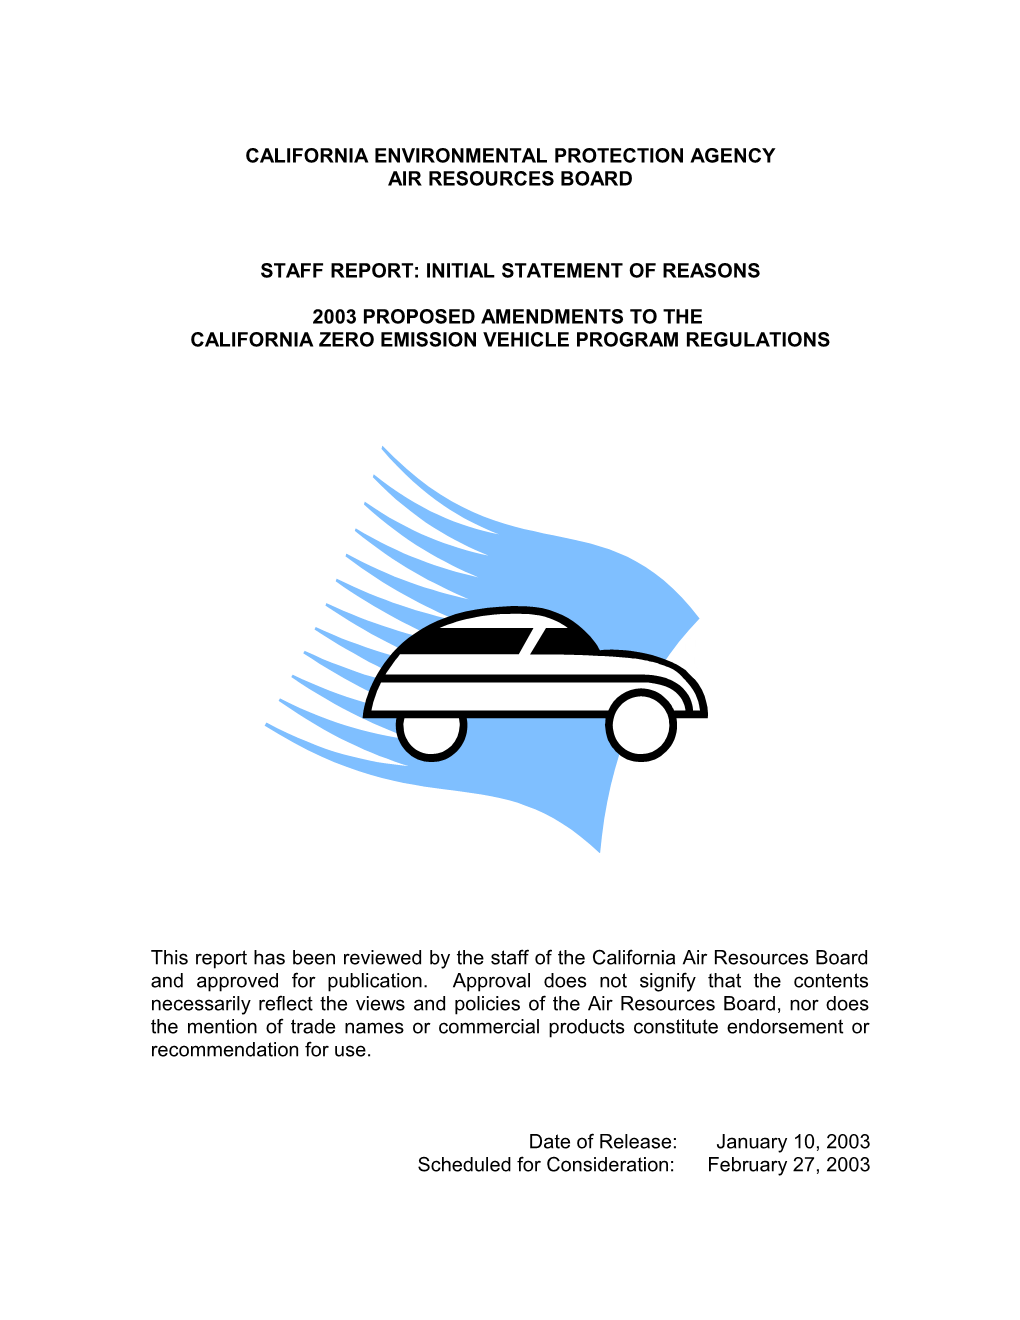 ISOR: 2003-01-10 2003 Proposed Amendments to the California Zero Emission Vehicle Program